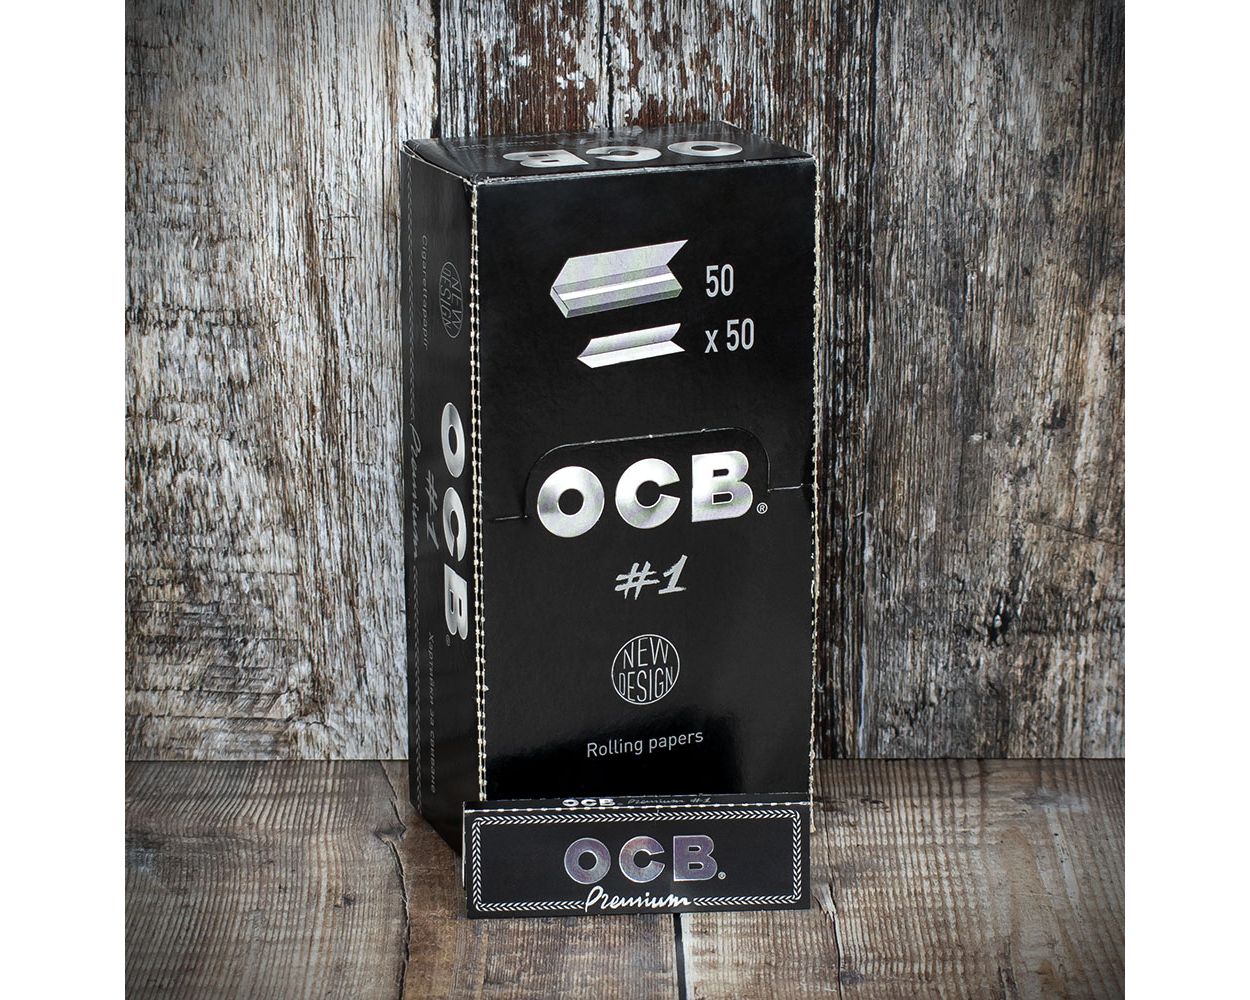  1 box - OCB Single Premium No1 rolling paper regular